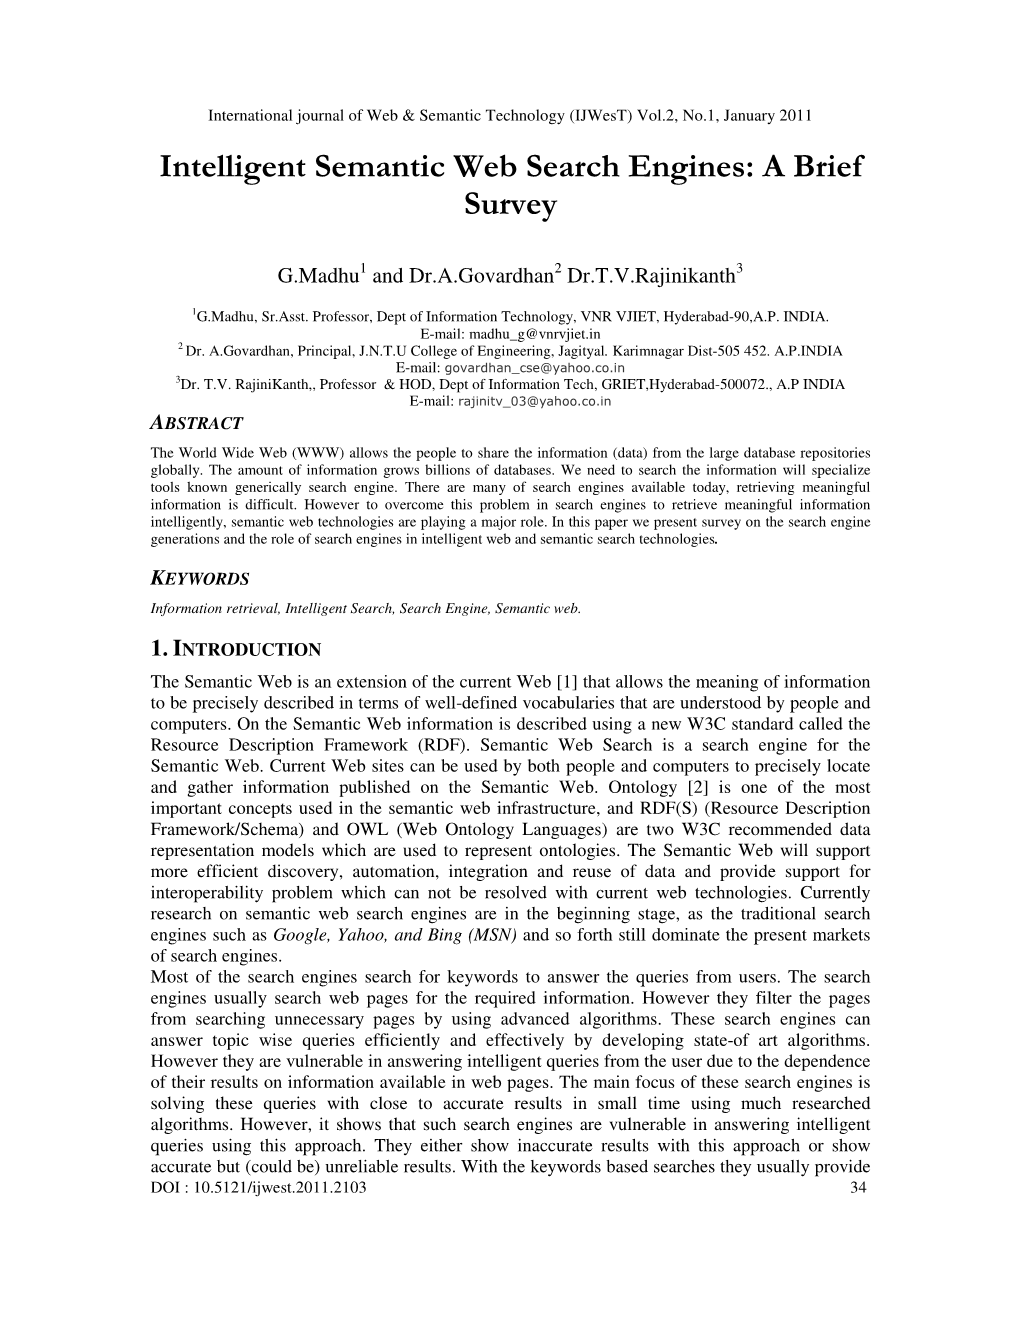 Intelligent Semantic Web Search Engines: a Brief Survey